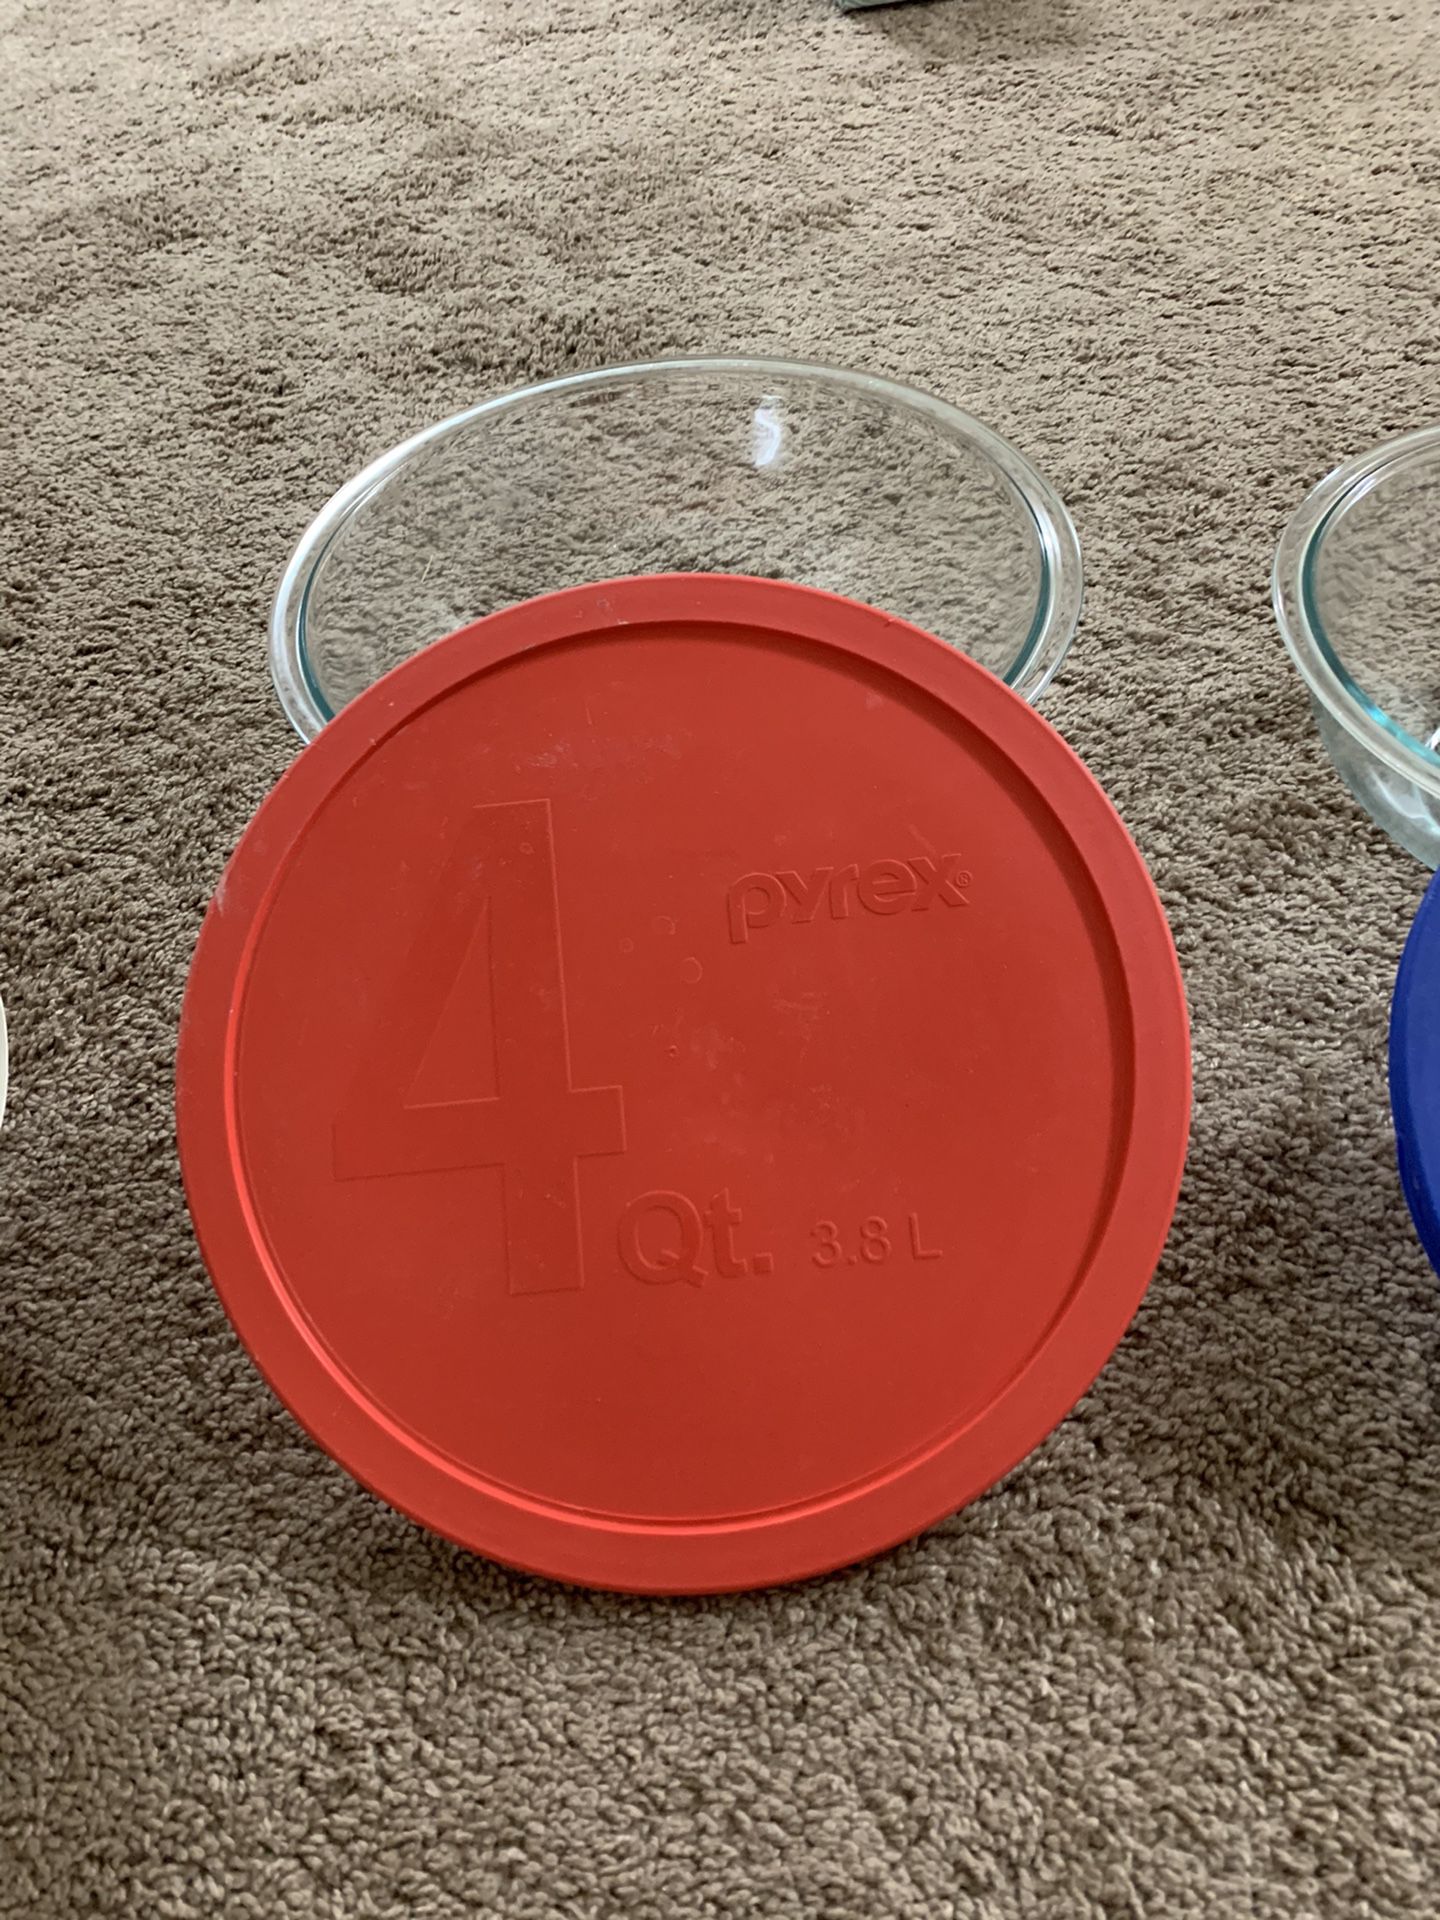 Pyrex Bowls with lids